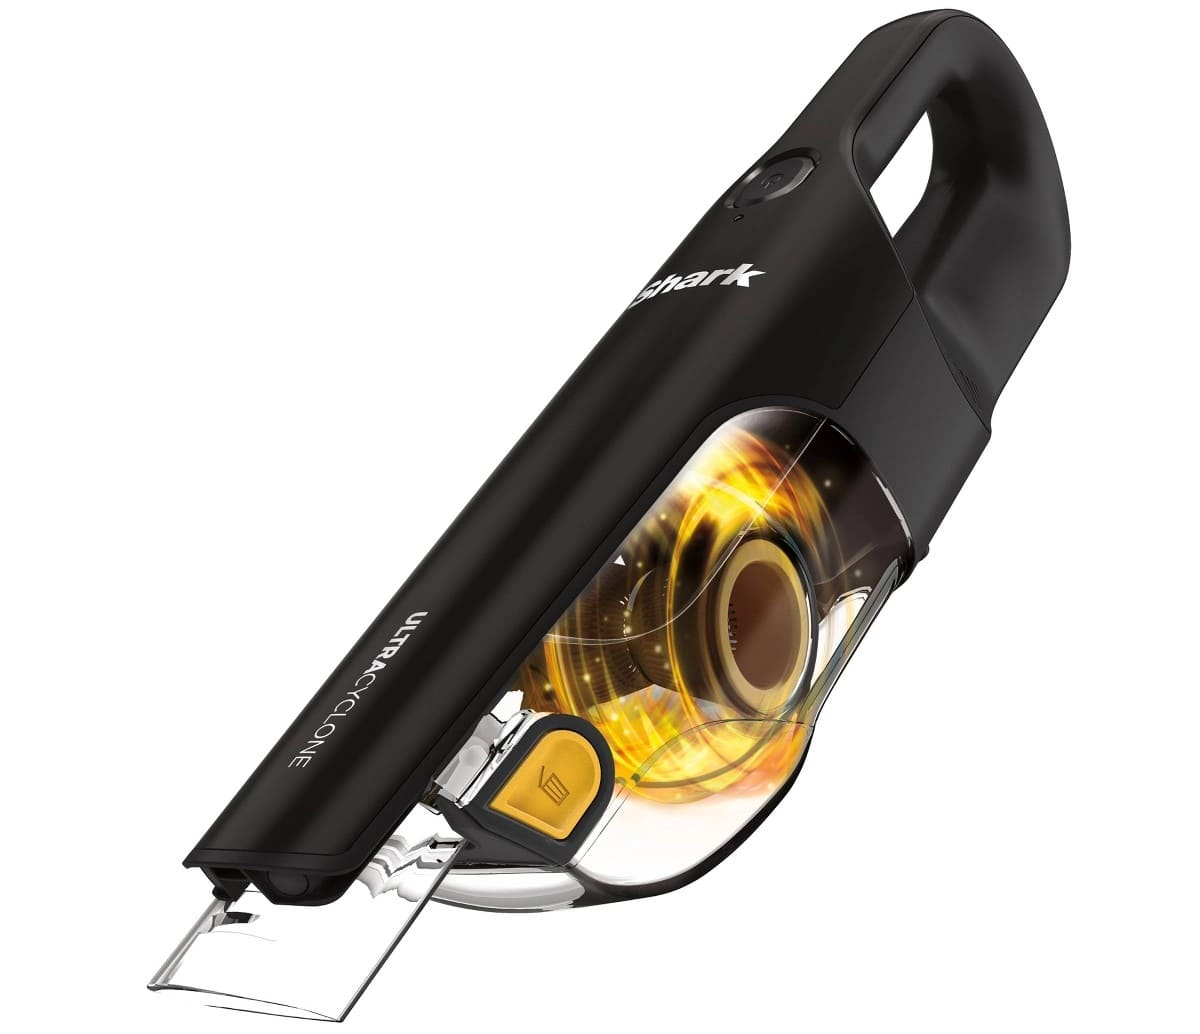 Shark UltraCyclone Pet Pro+ Cordless Handheld Vacuum from Target